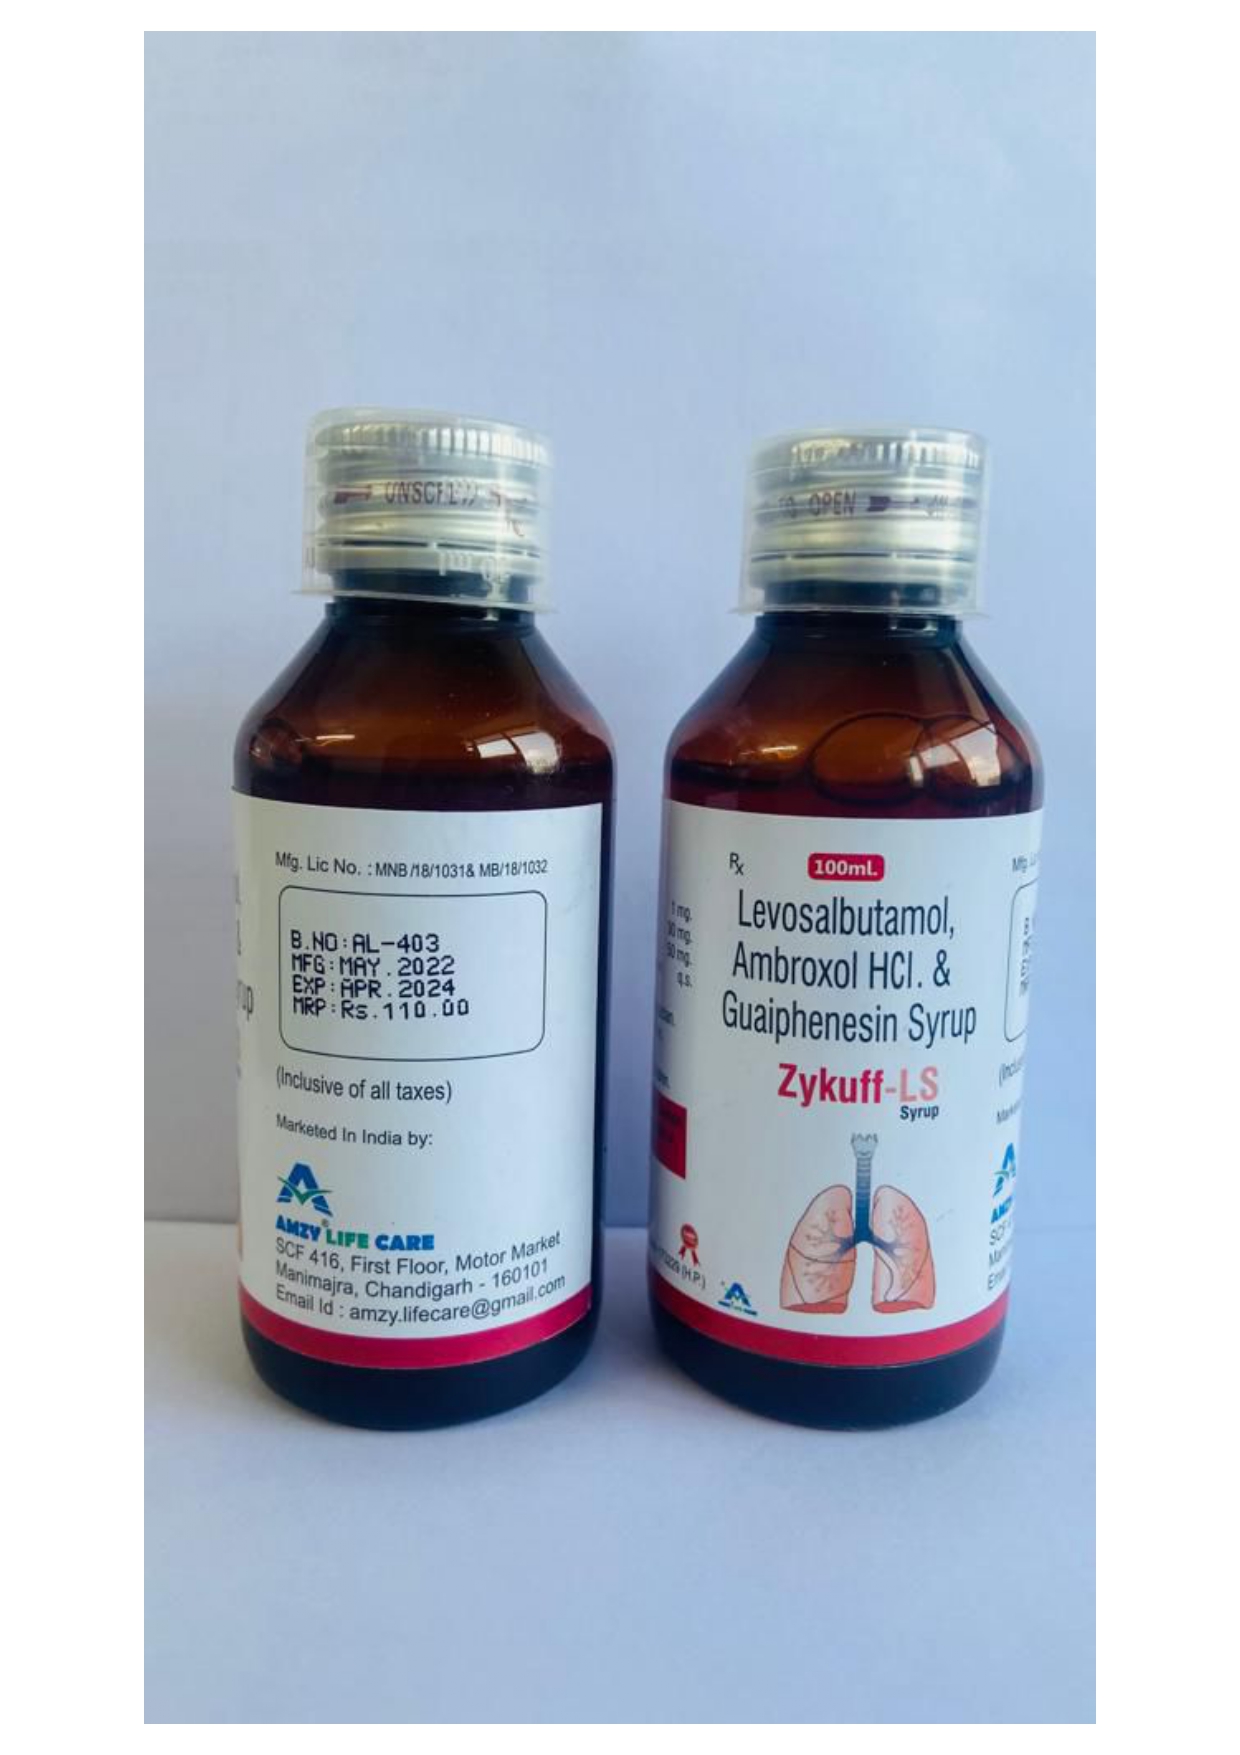 levosalbutamol 1mg
+ ambroxol 30mg + guaiphenesin  50mg